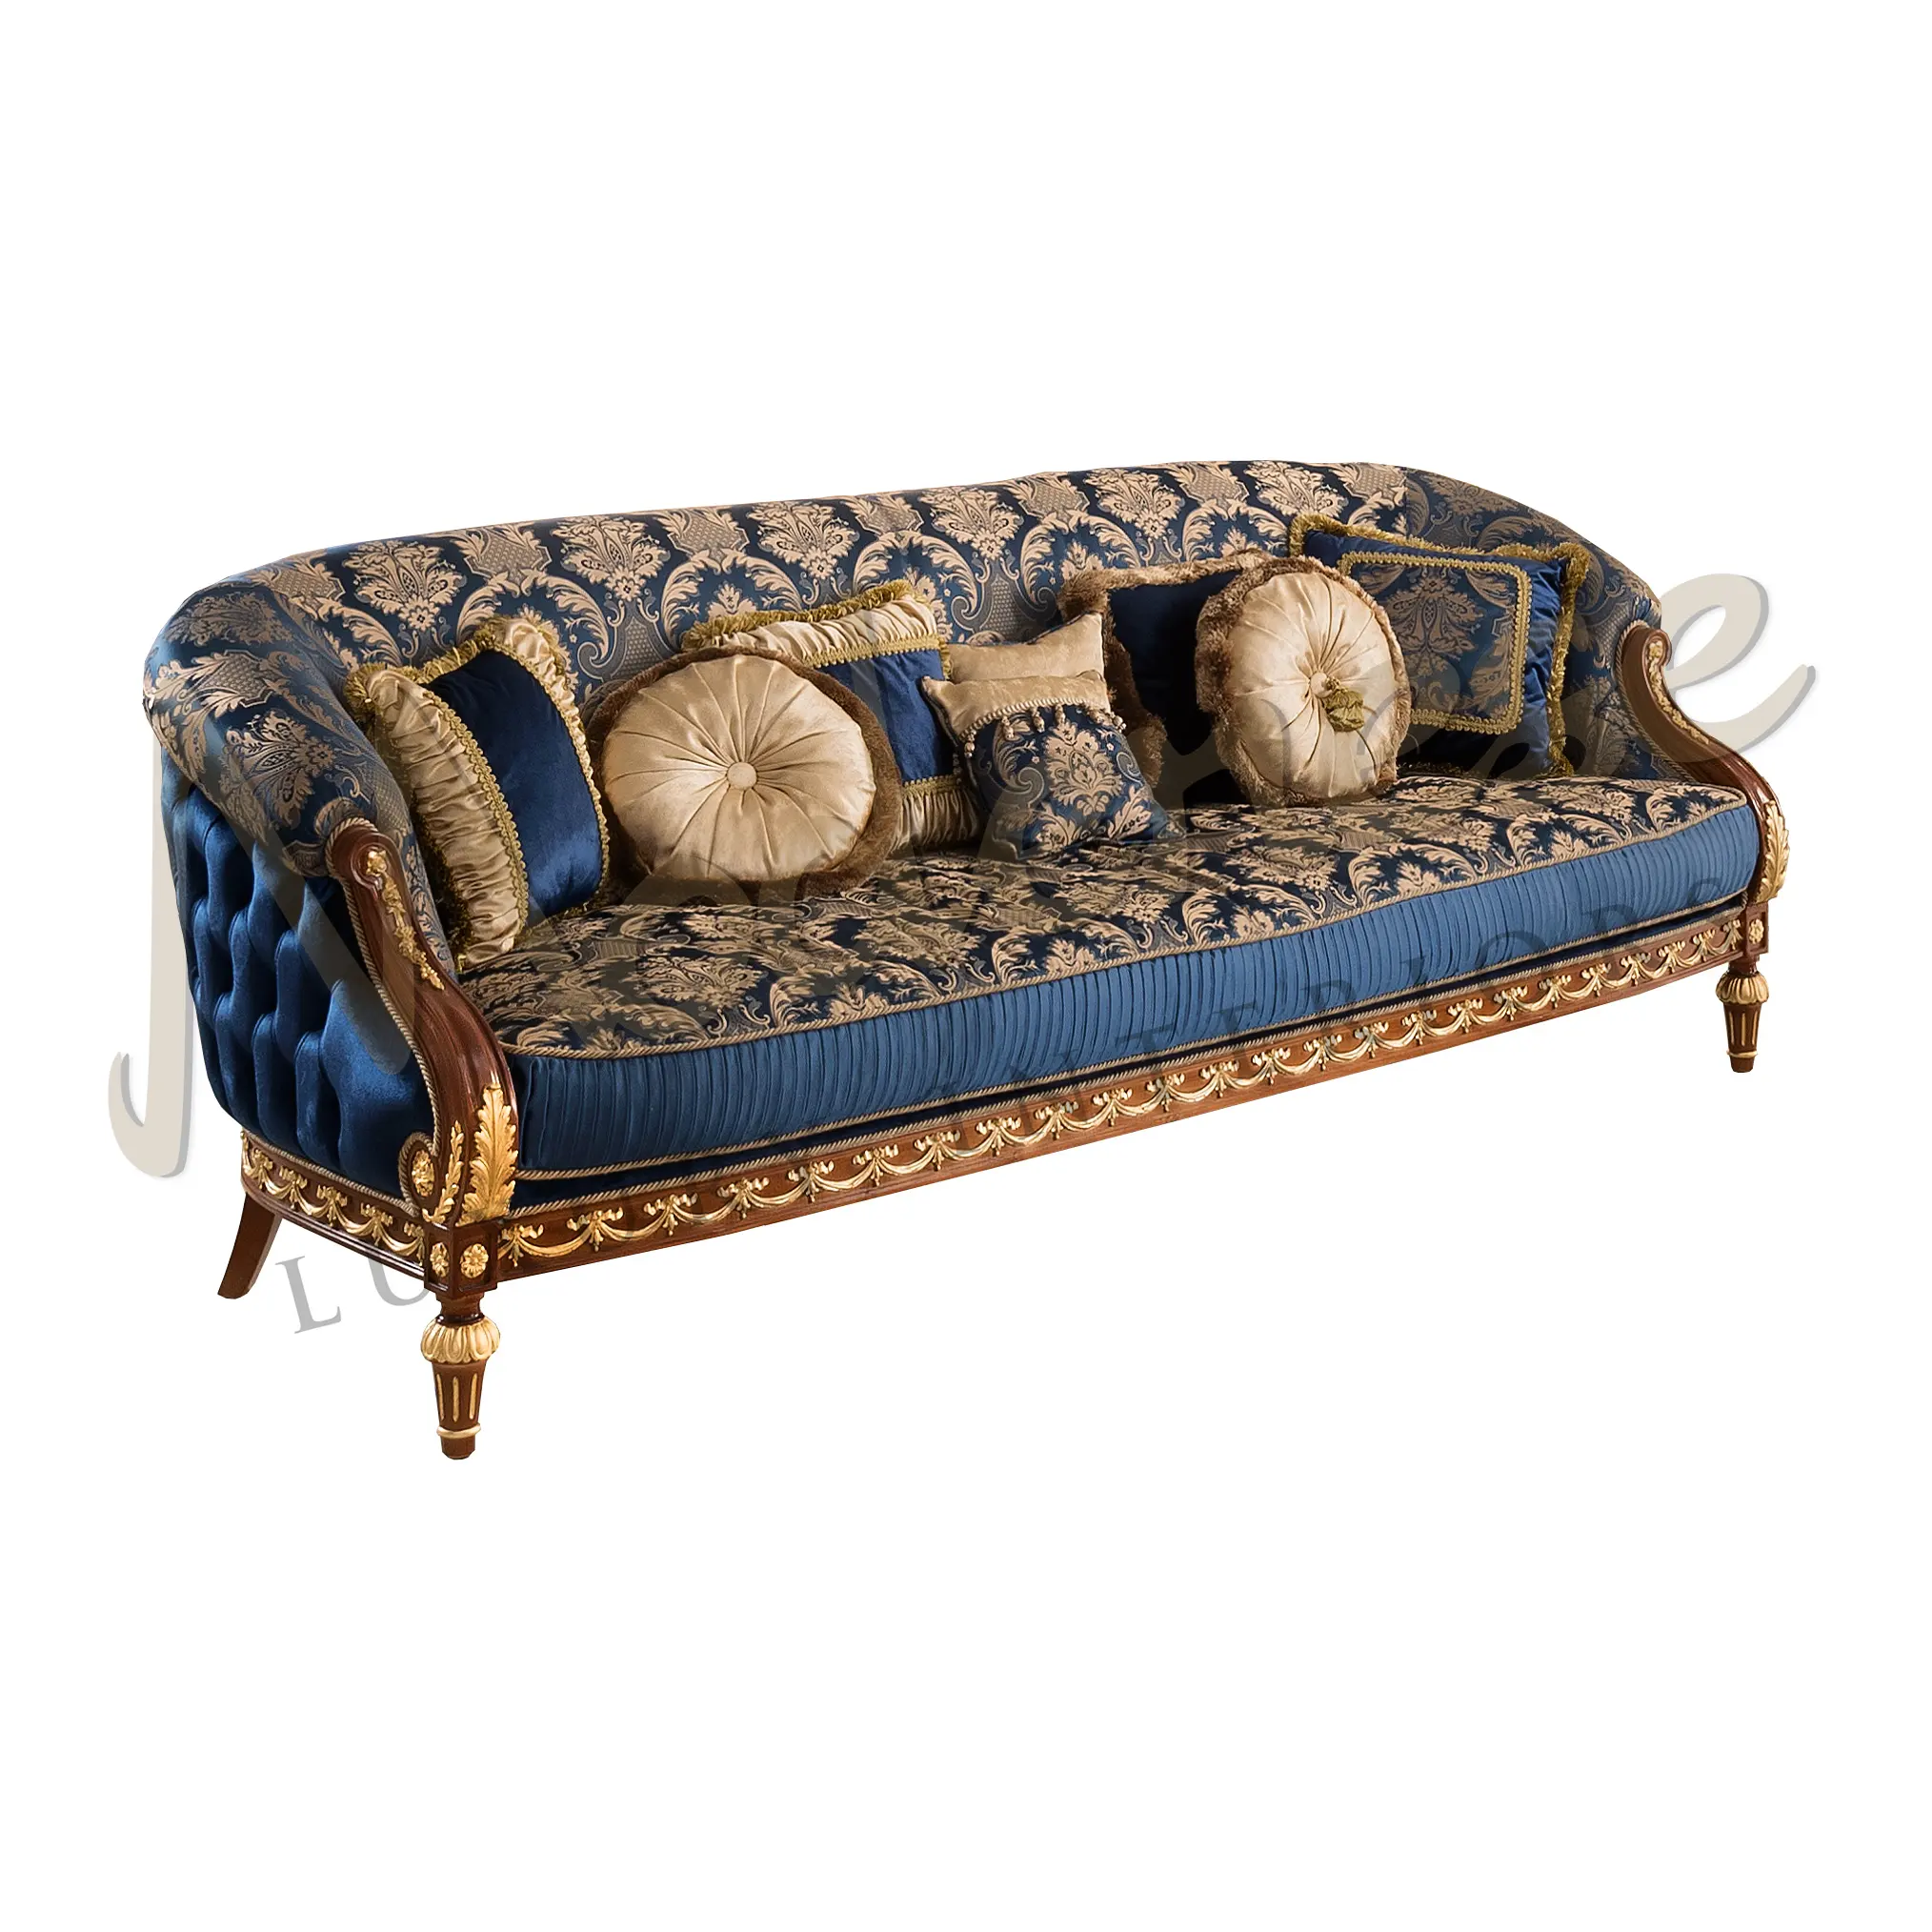 Modenese Luxury Interiorsによる最高級の青い生地と金箔の洗練されたロイヤルパレスのクラシックな3人掛けソファ